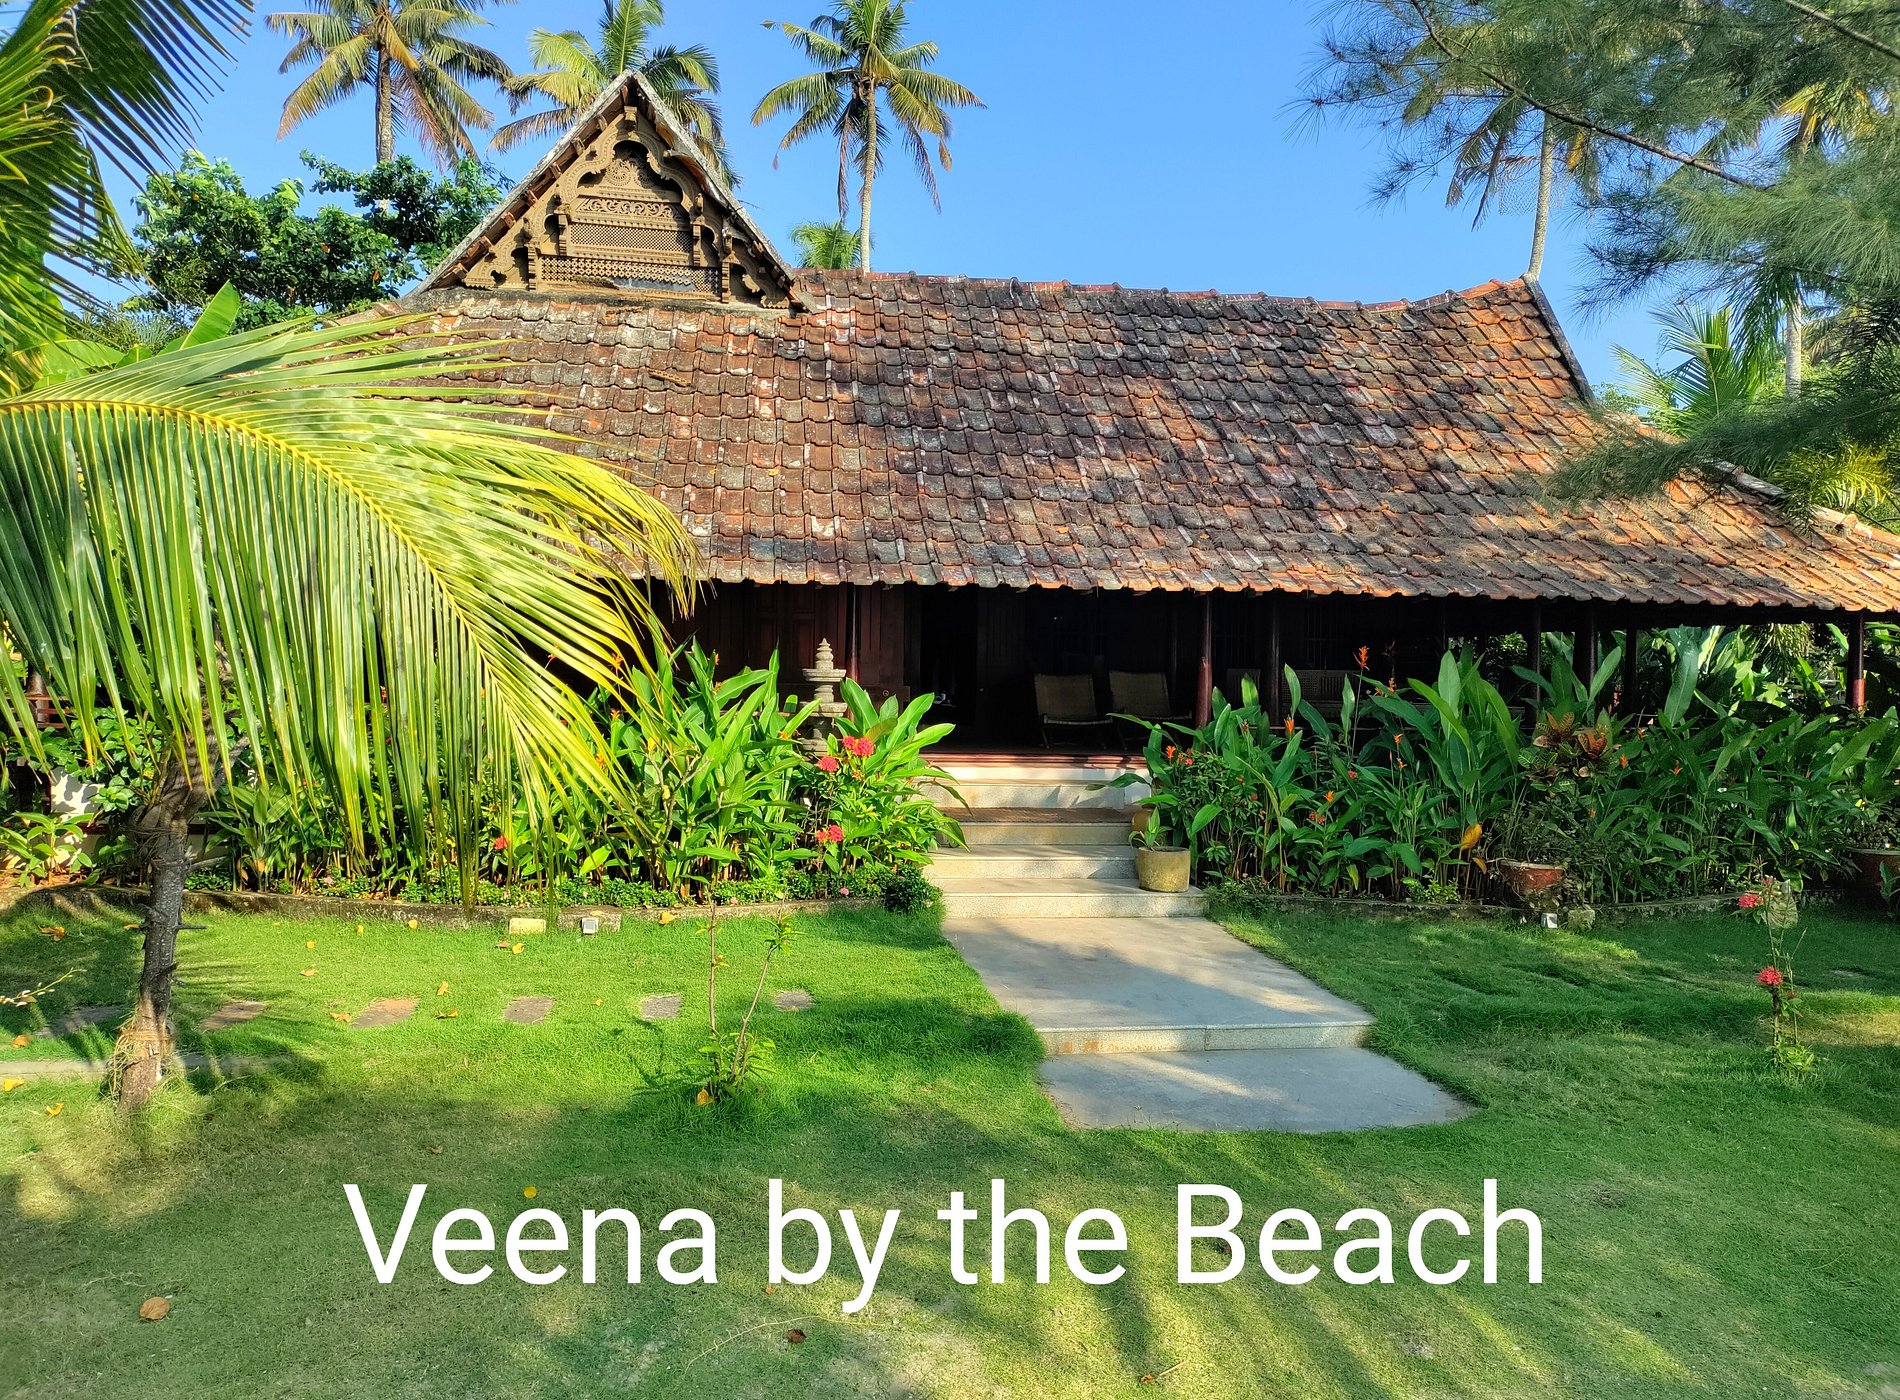 Veena - by the Beach image